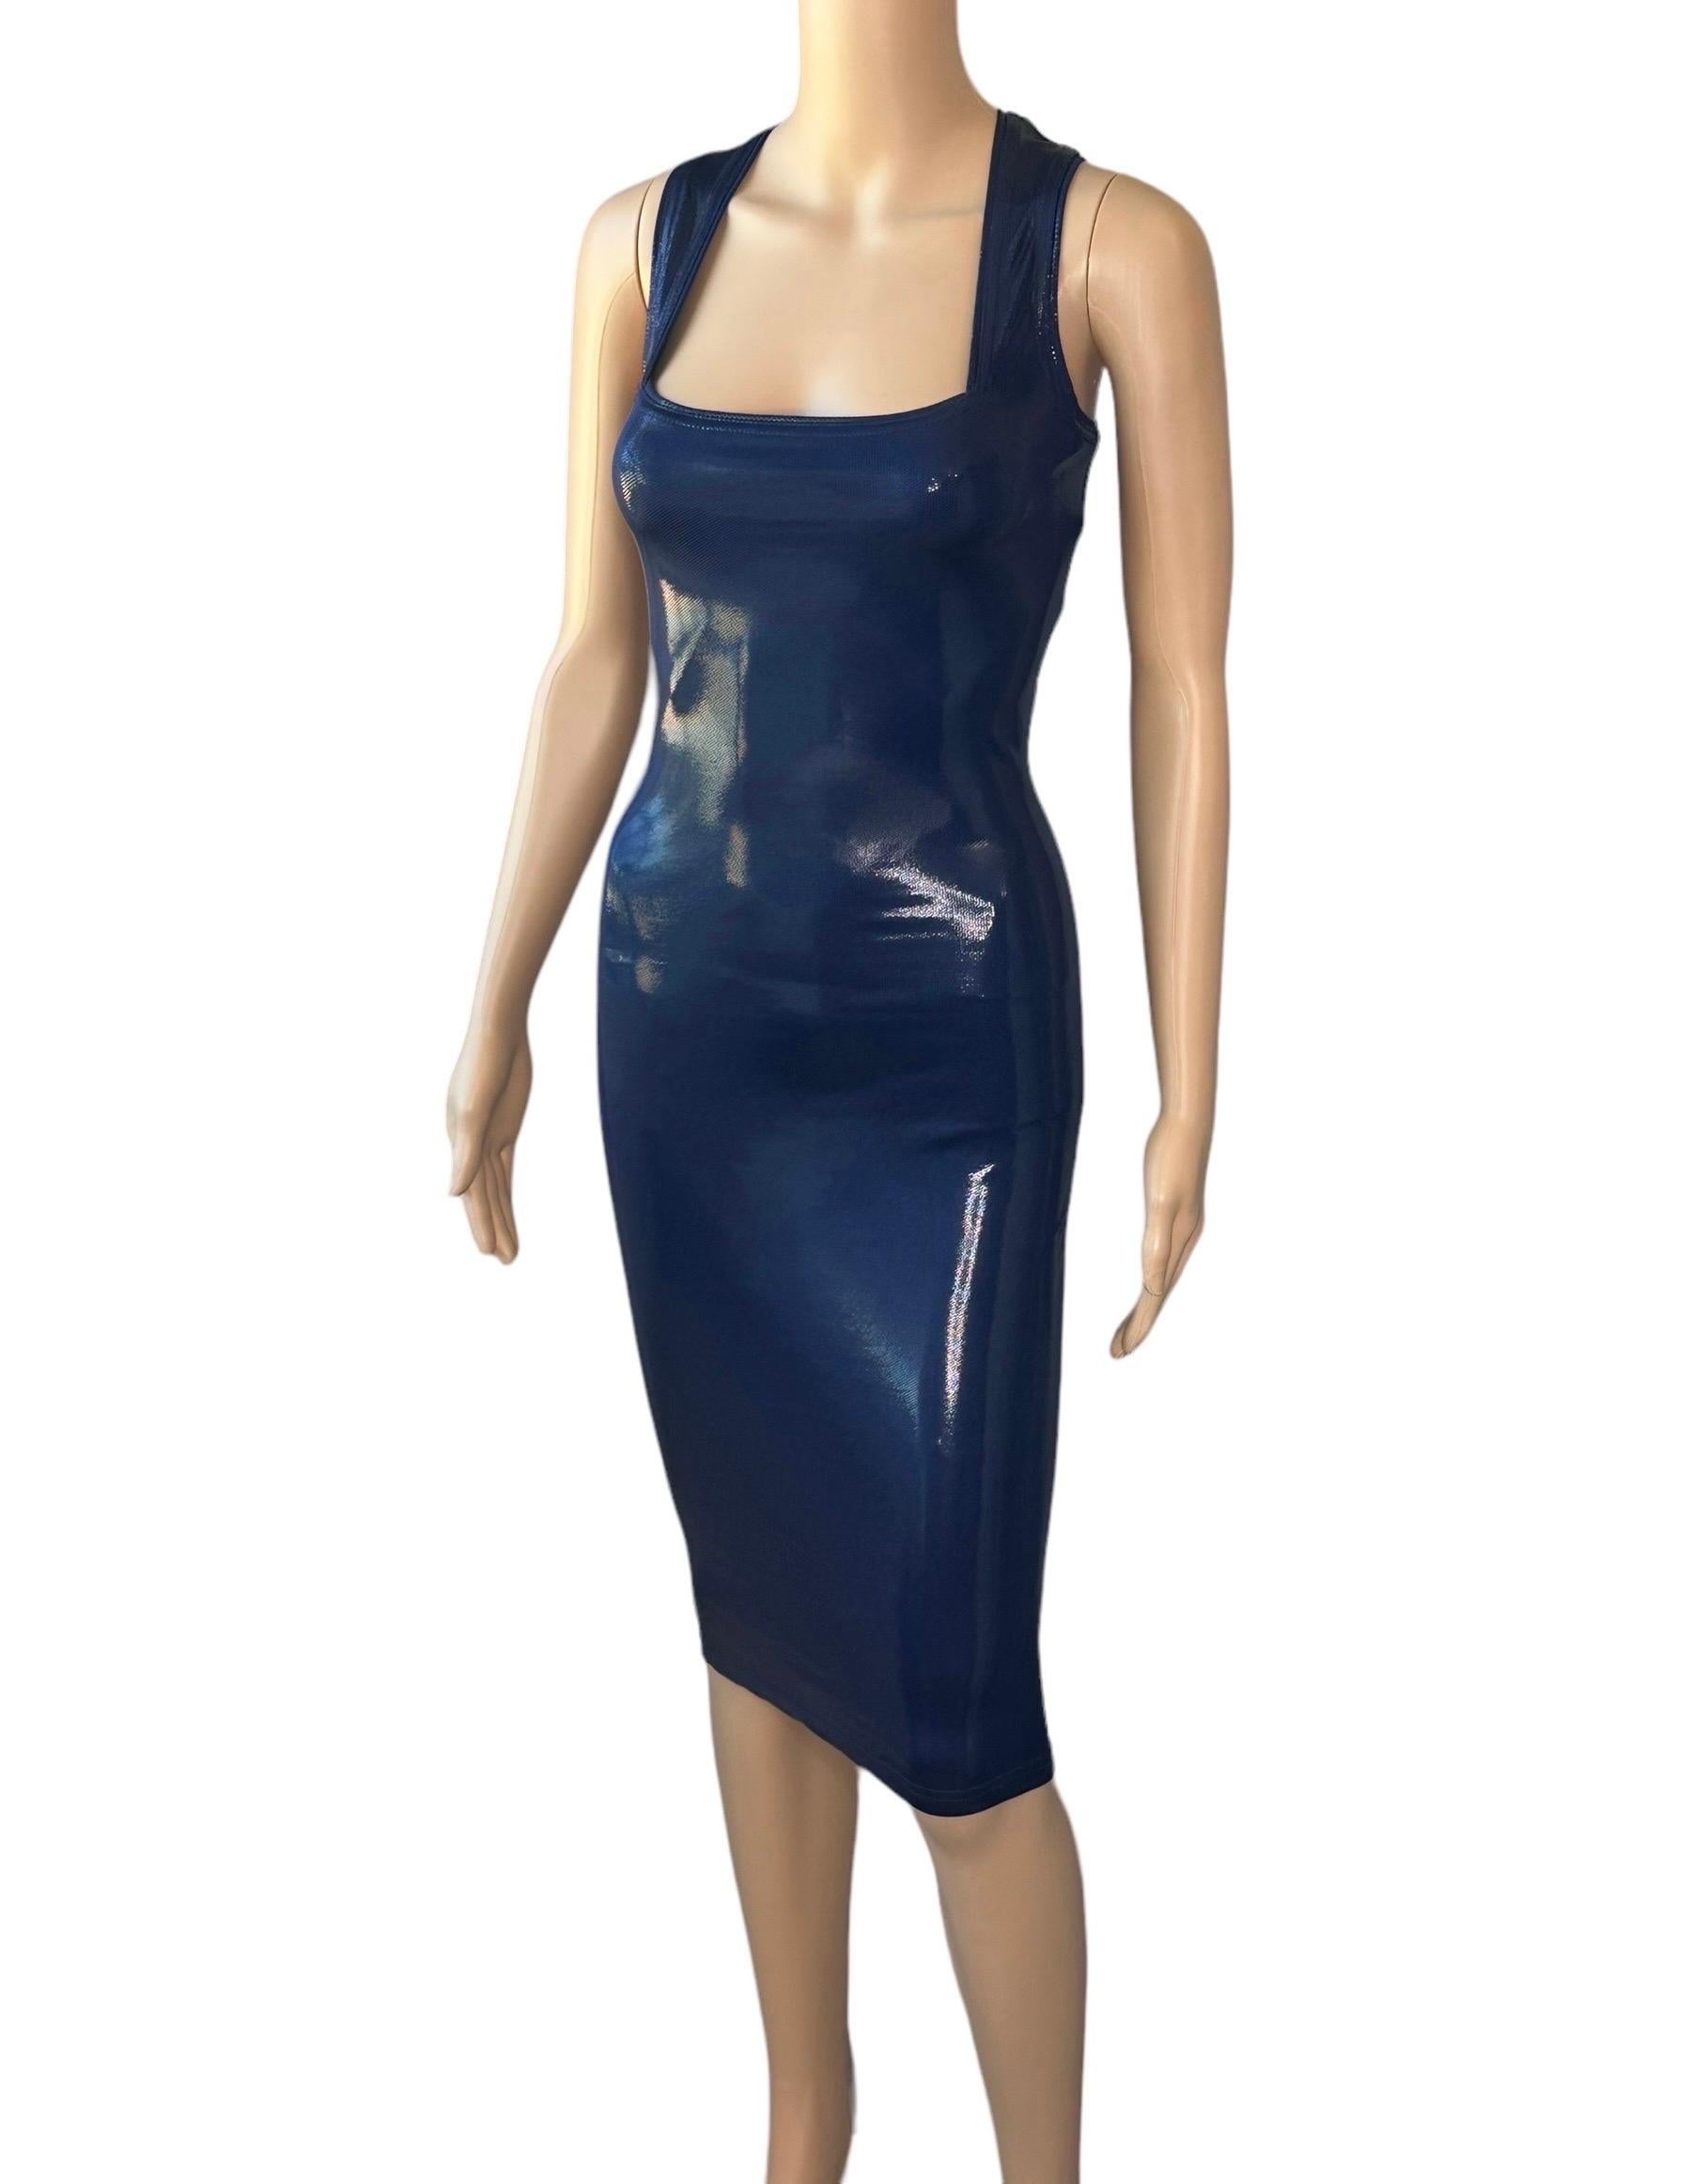 Gianni Versace c. 1994 Vintage Wet Look Stretch Bodycon Navy Blue Midi Dress 2